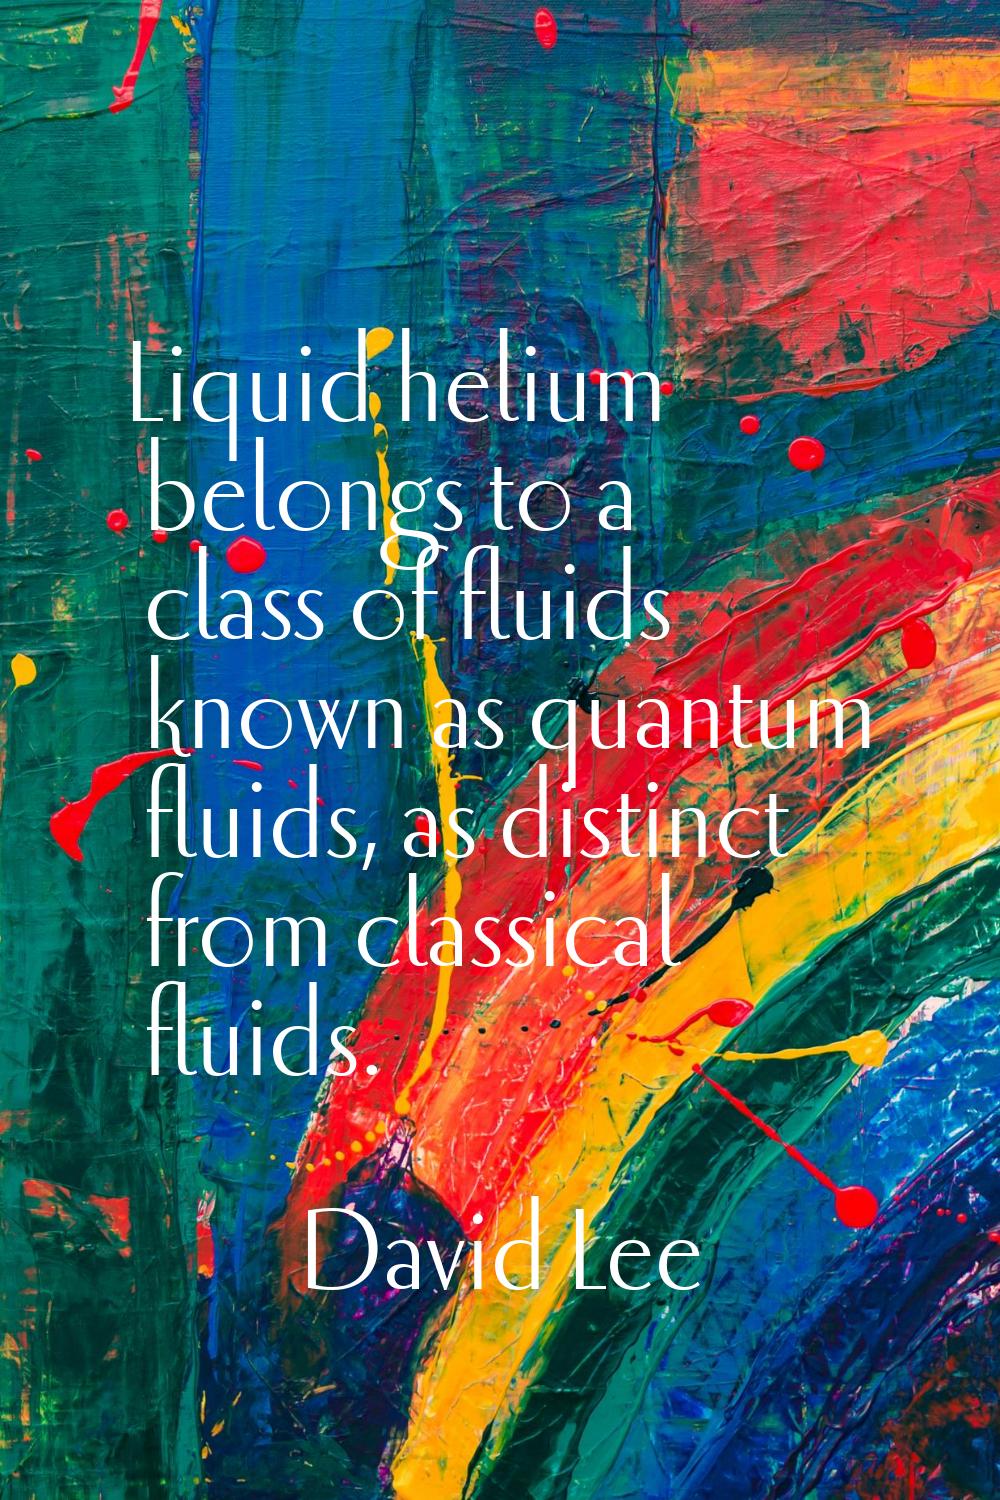 Liquid helium belongs to a class of fluids known as quantum fluids, as distinct from classical flui